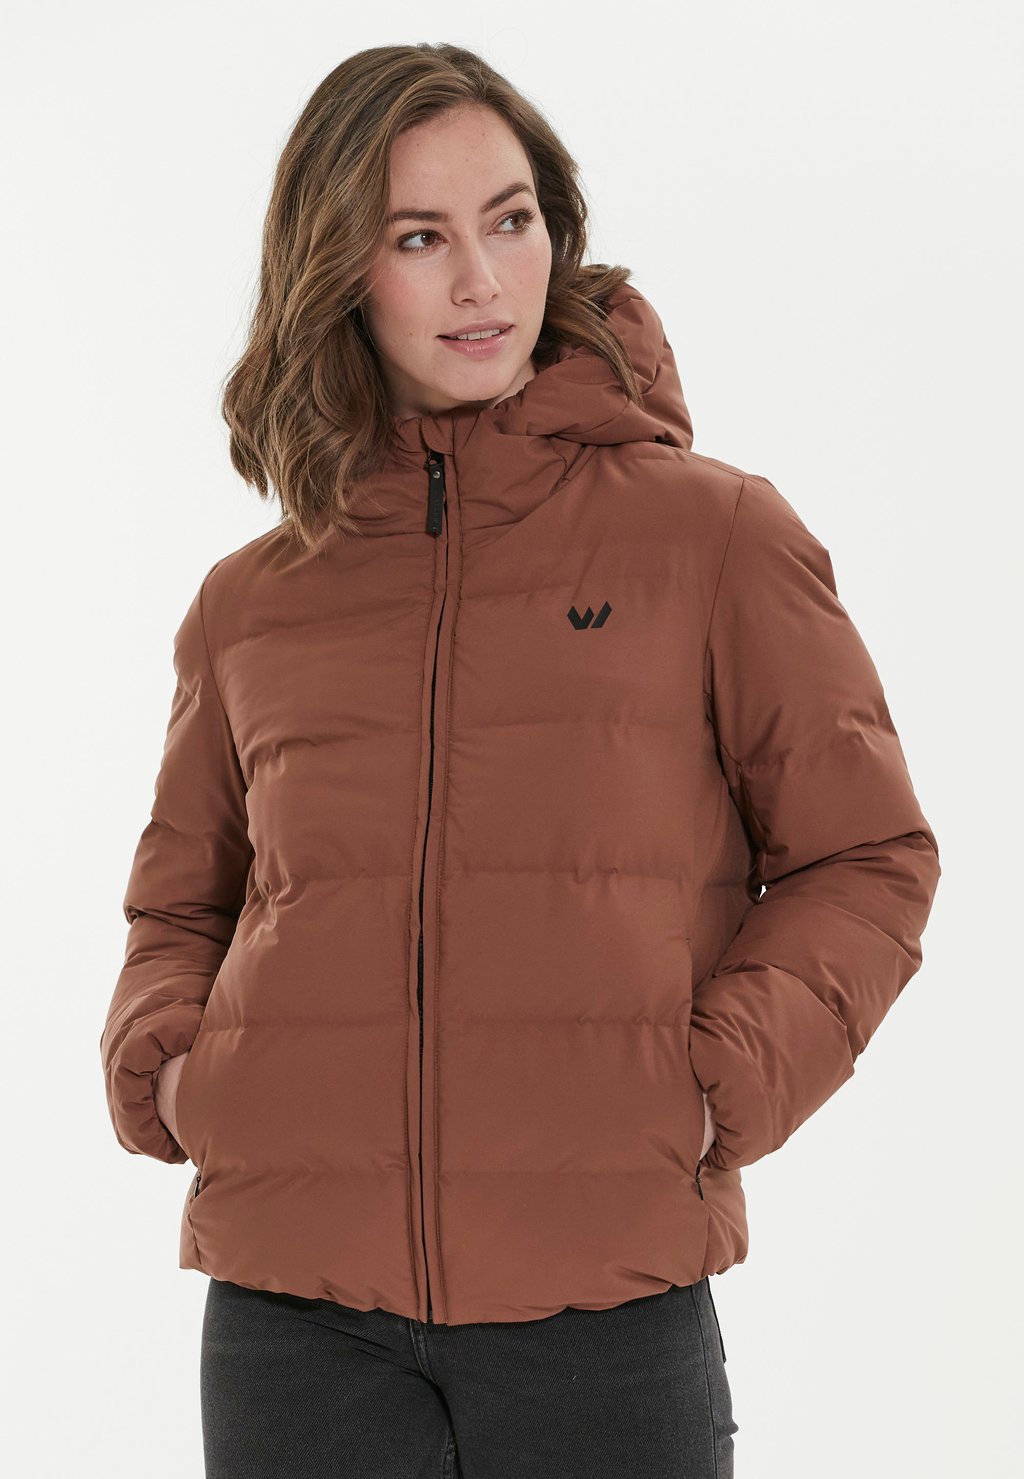 Зимняя куртка Whistler, коричневый